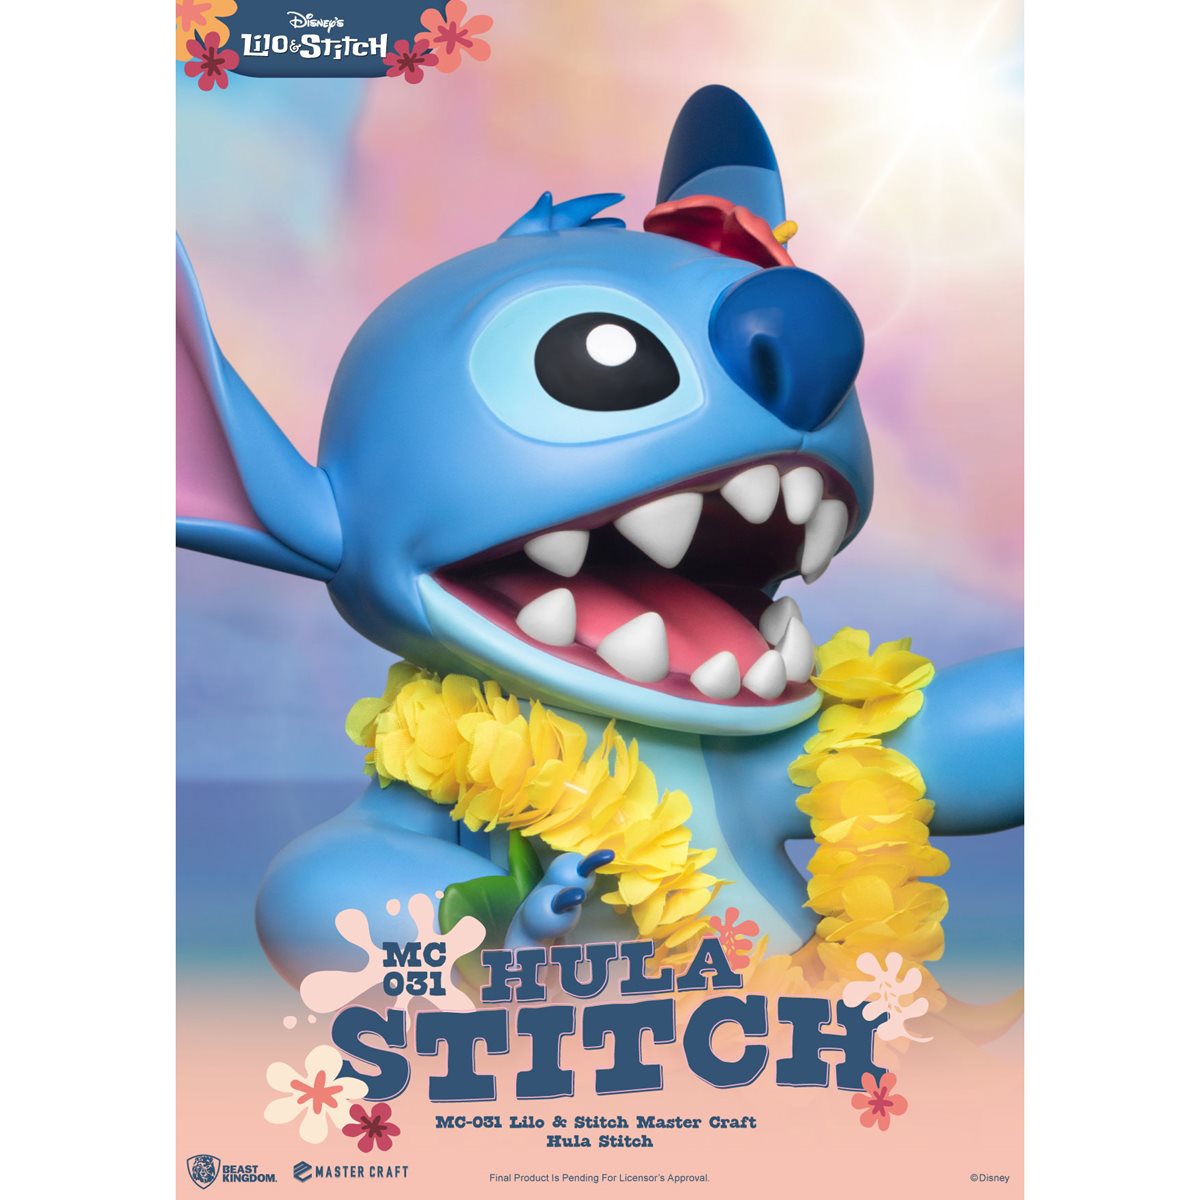 1616 Holdings Disney - Lilo and Stitch - Stitch Figure Set - Set of 2  Figures - 3 Inch (Superhero Stitch and Hula Stitch) stitchfig1 Multicolor